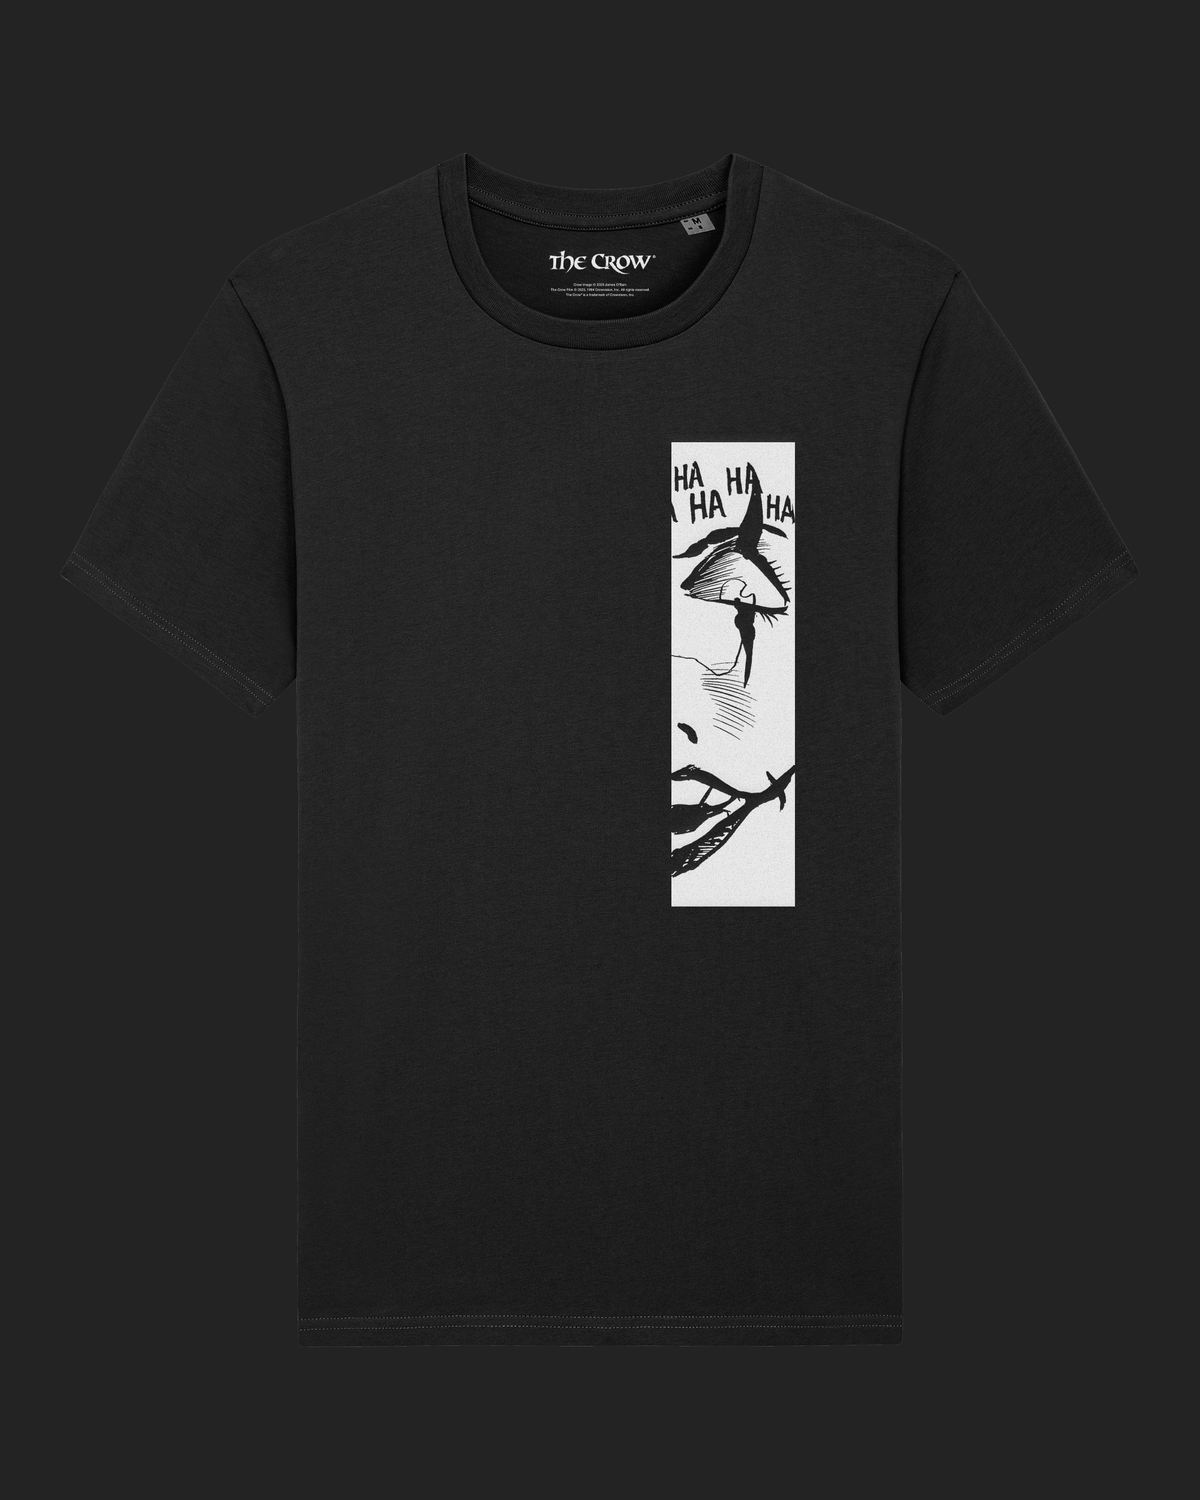 The Crow HA HA HA HA Black Unisex T-Shirt - by James O&#39;Barr